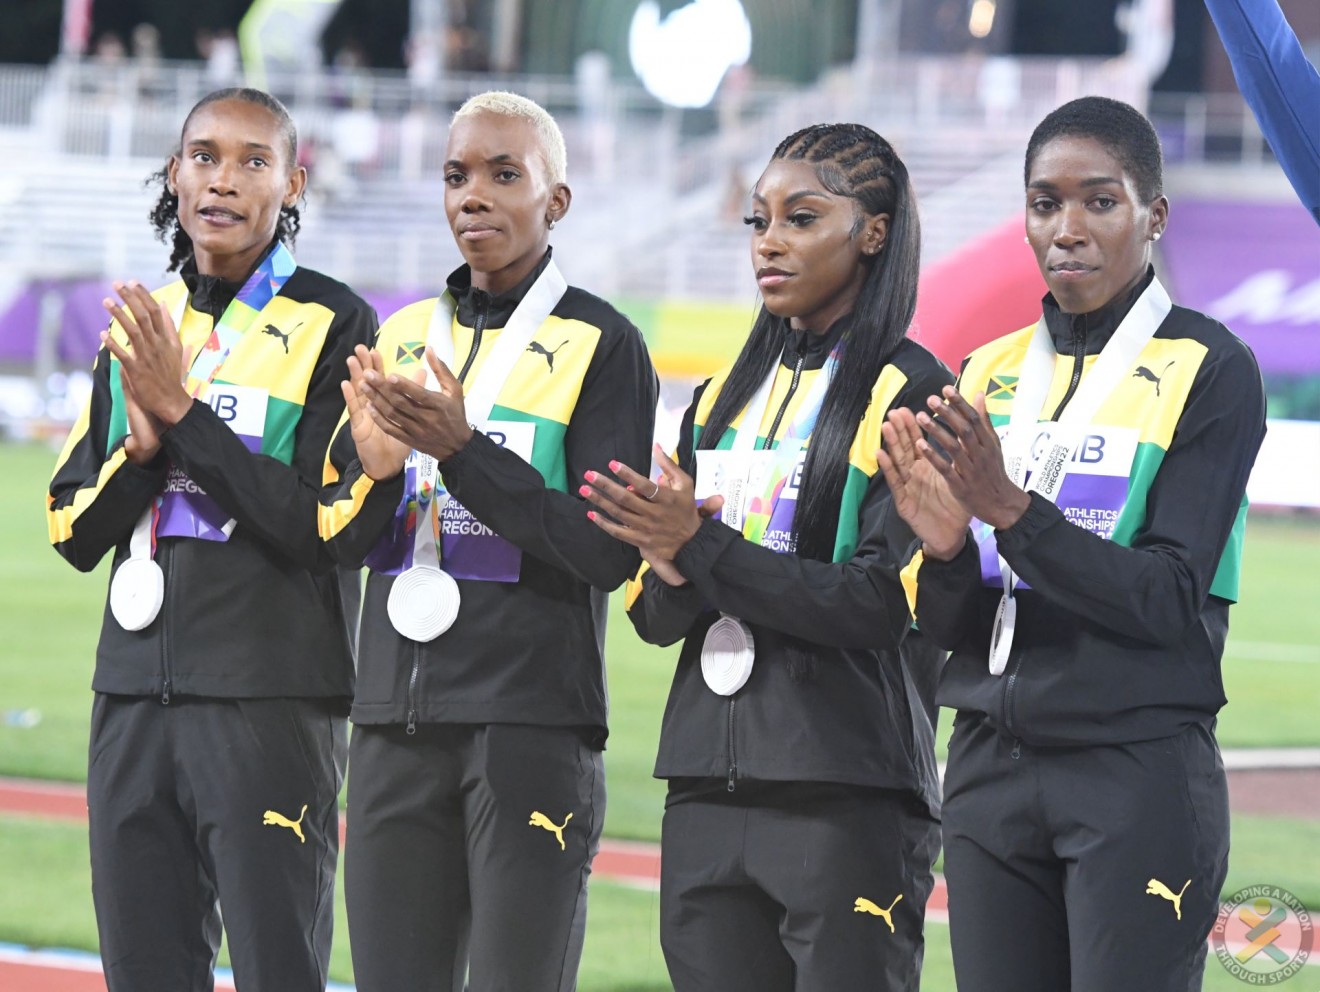 4x400M Women's World Championship Silver Medalists